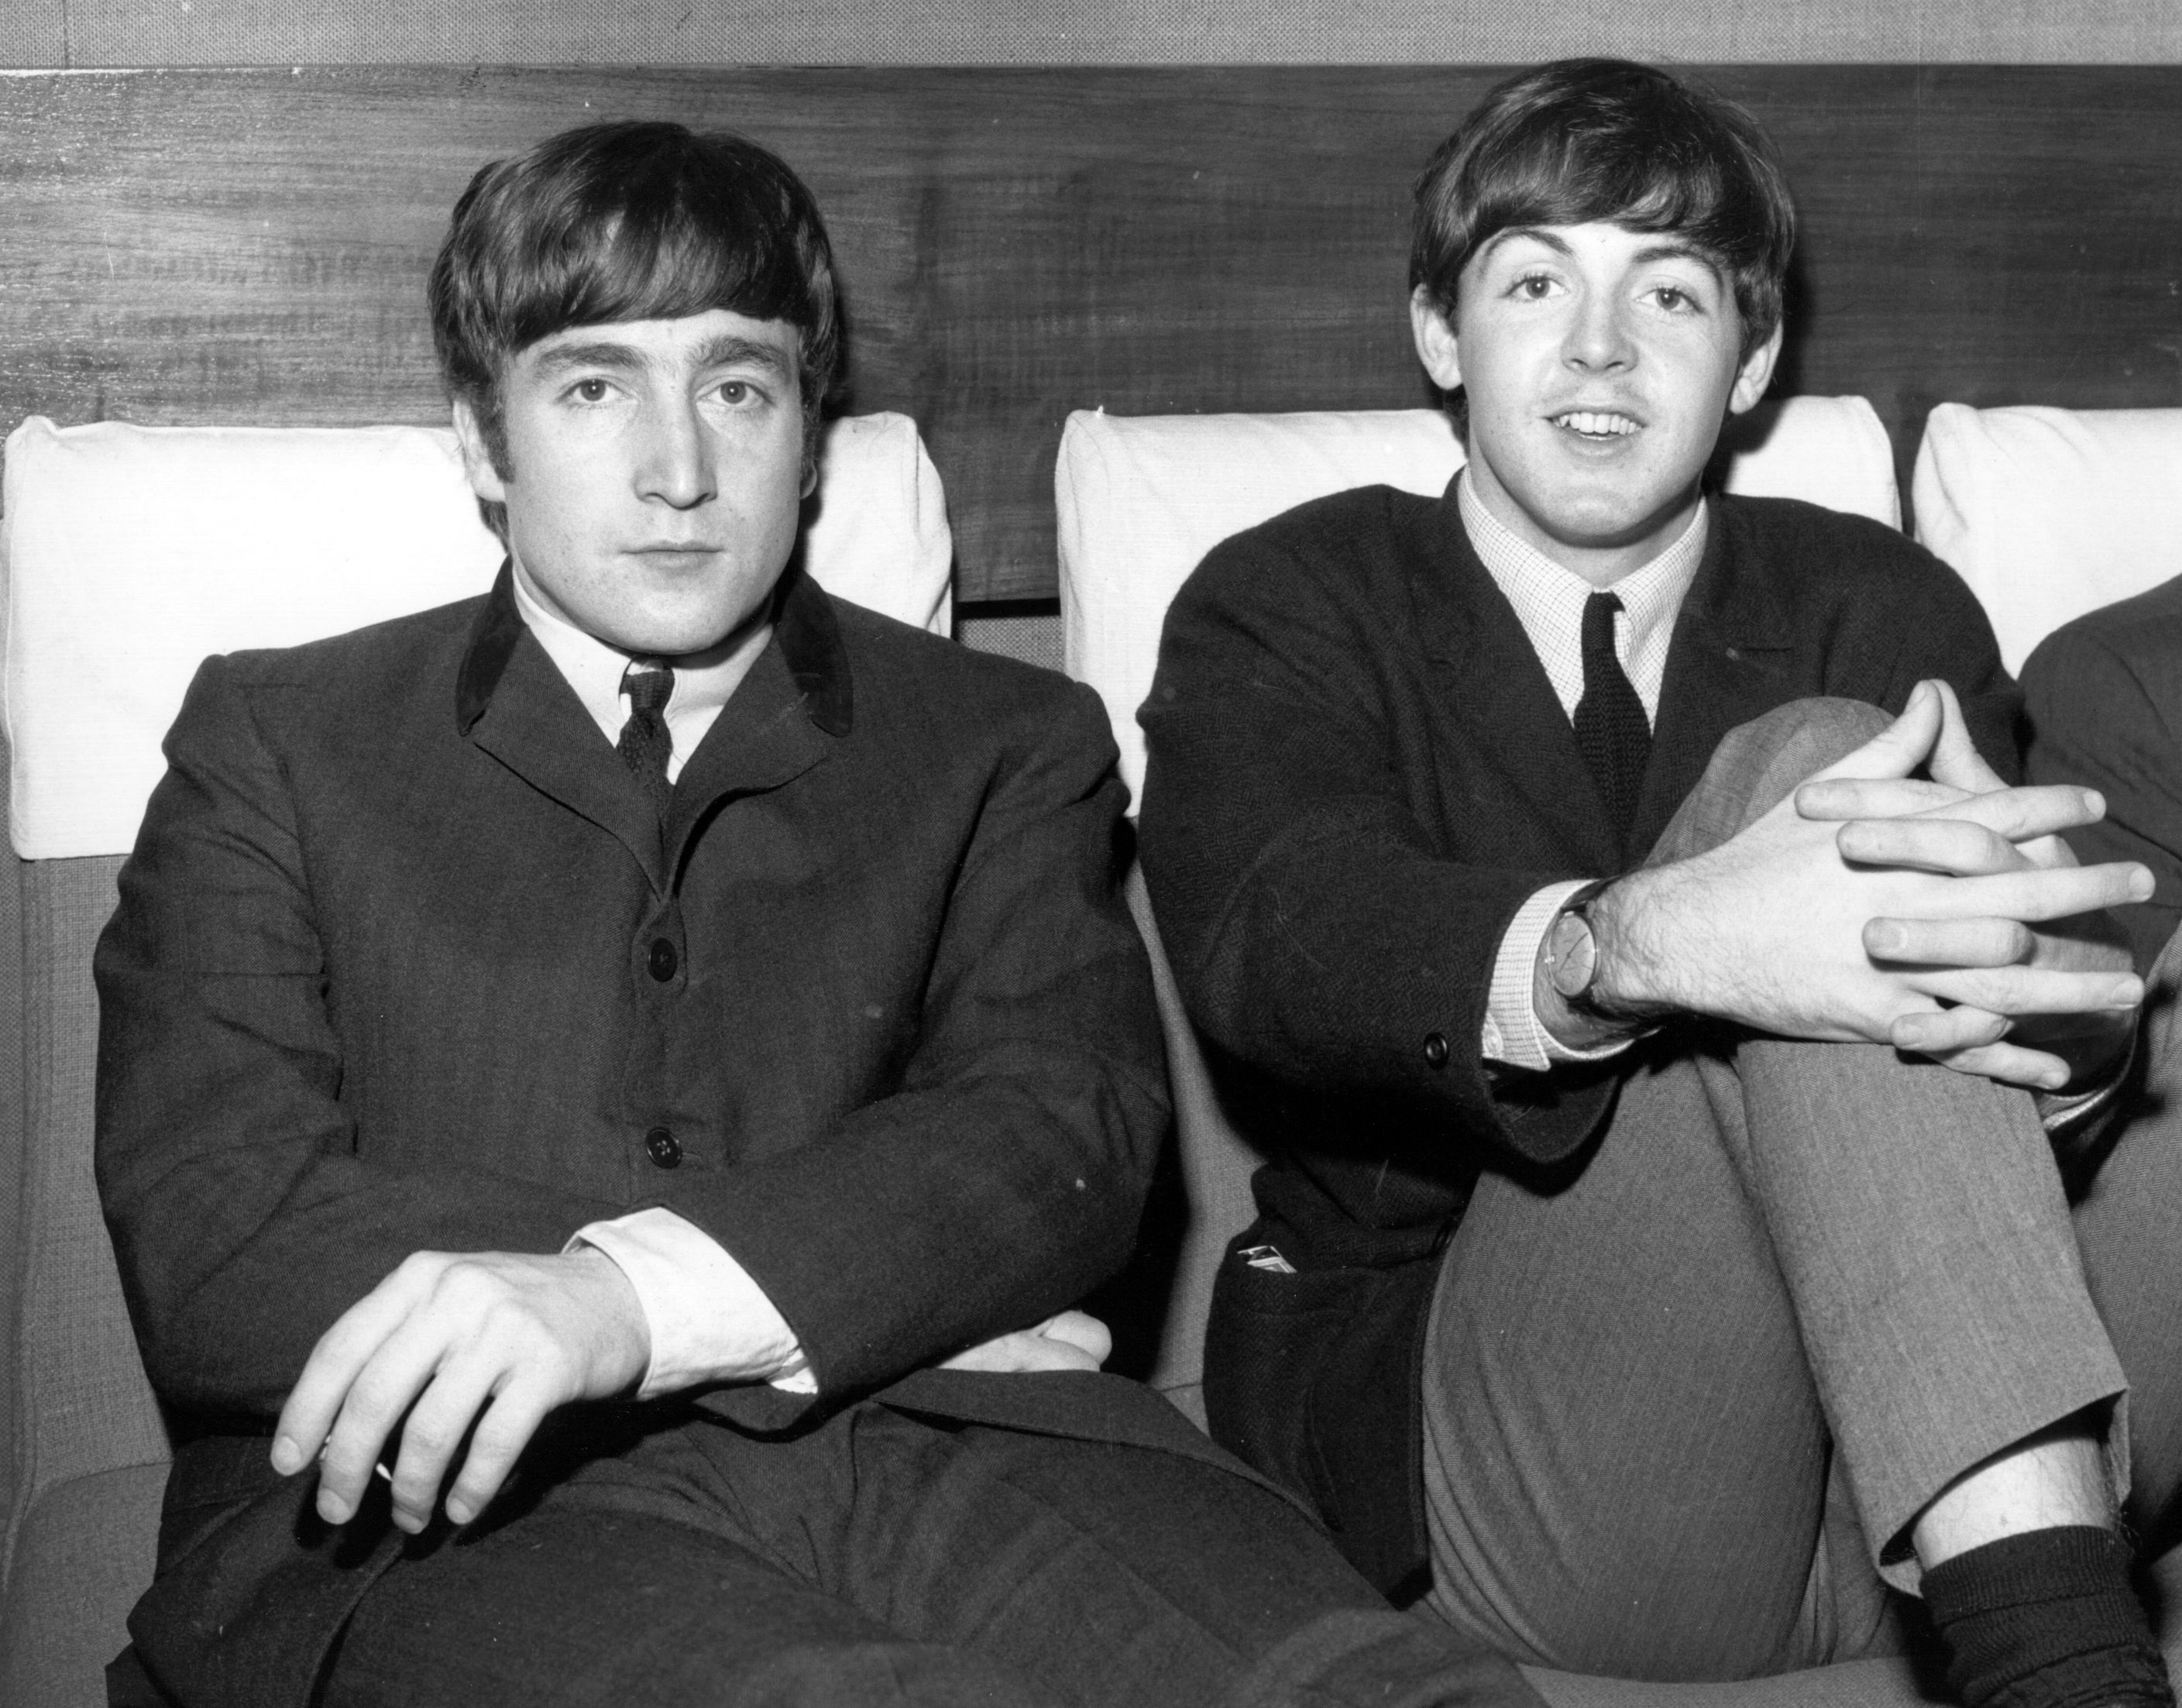 John Lnnnon and Paul McCartney of The Beatles